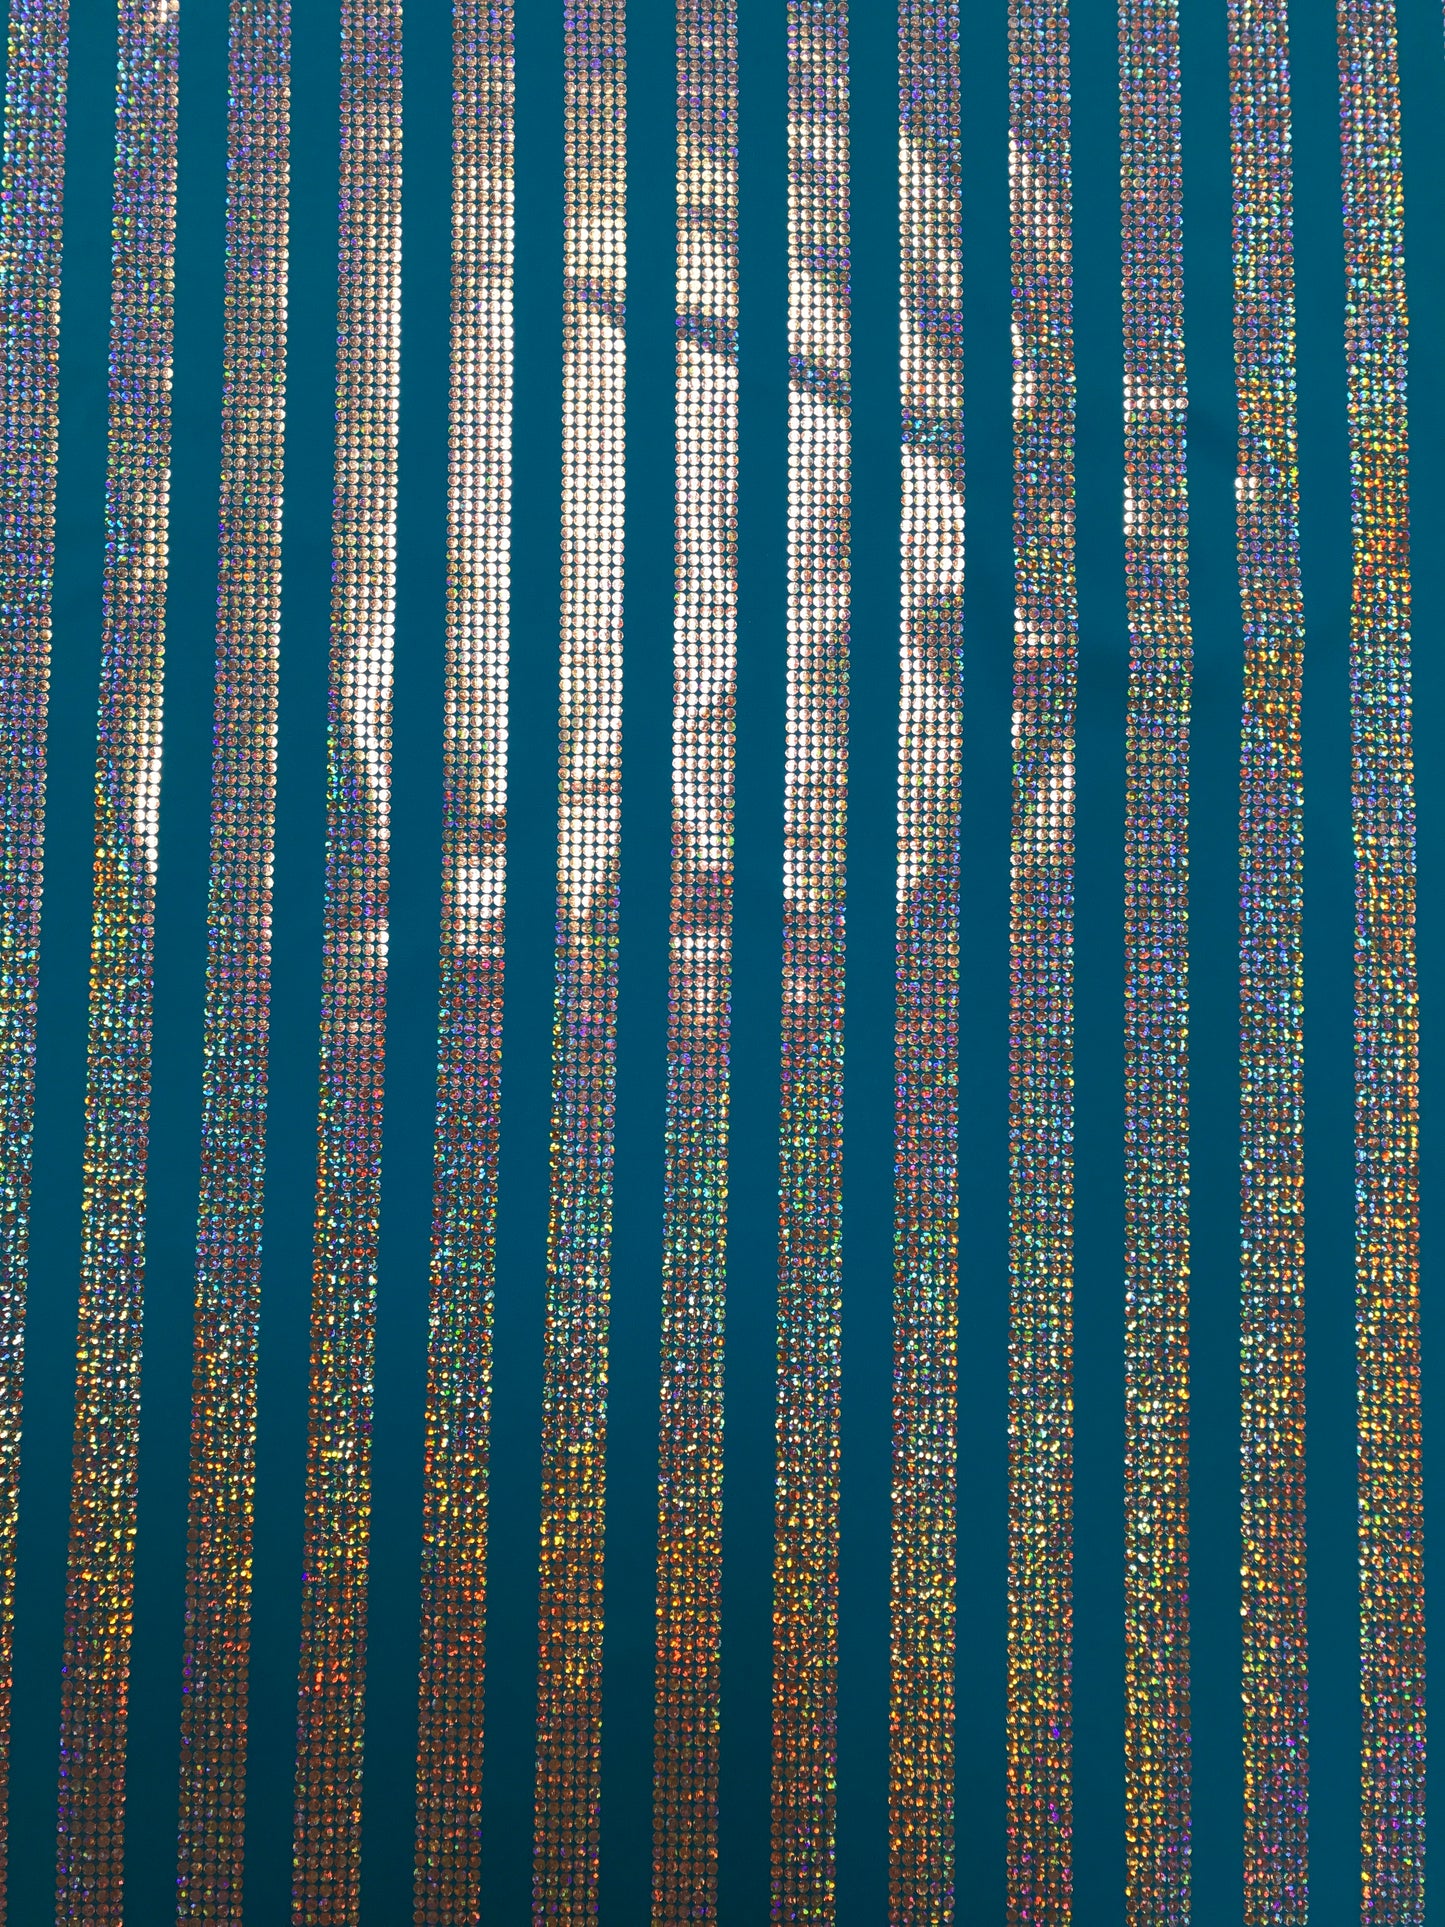 Digital stripe